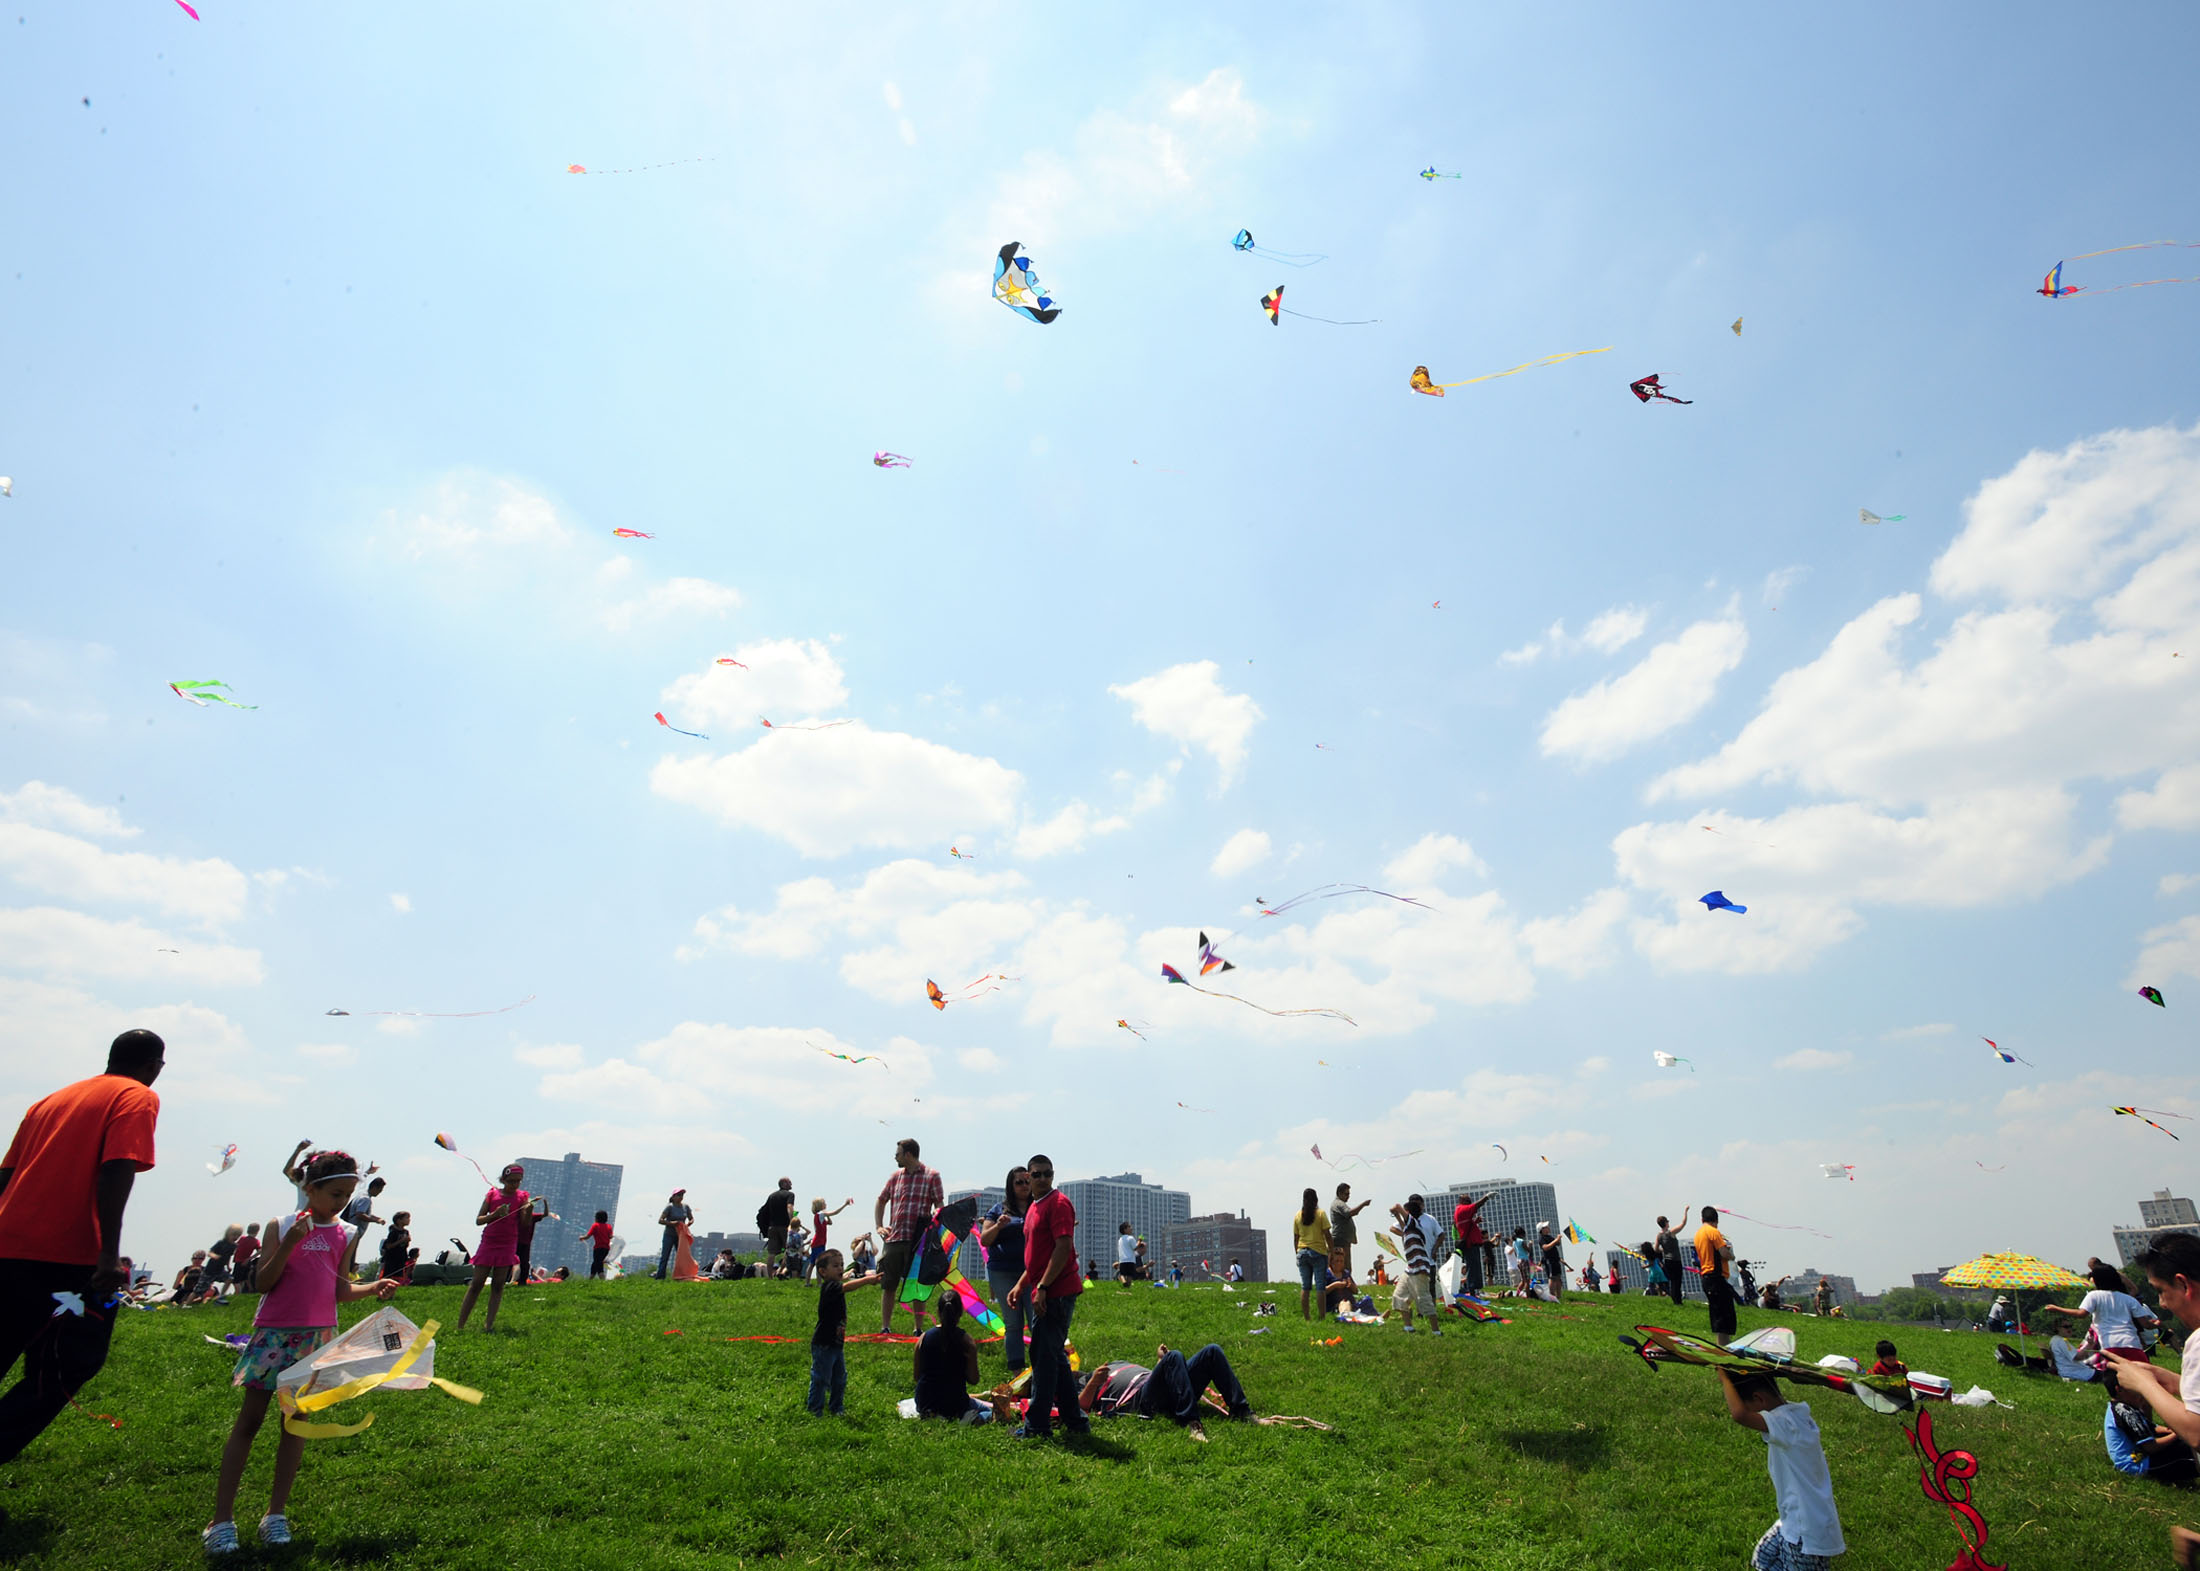 Children fly NATO kites in Chicago